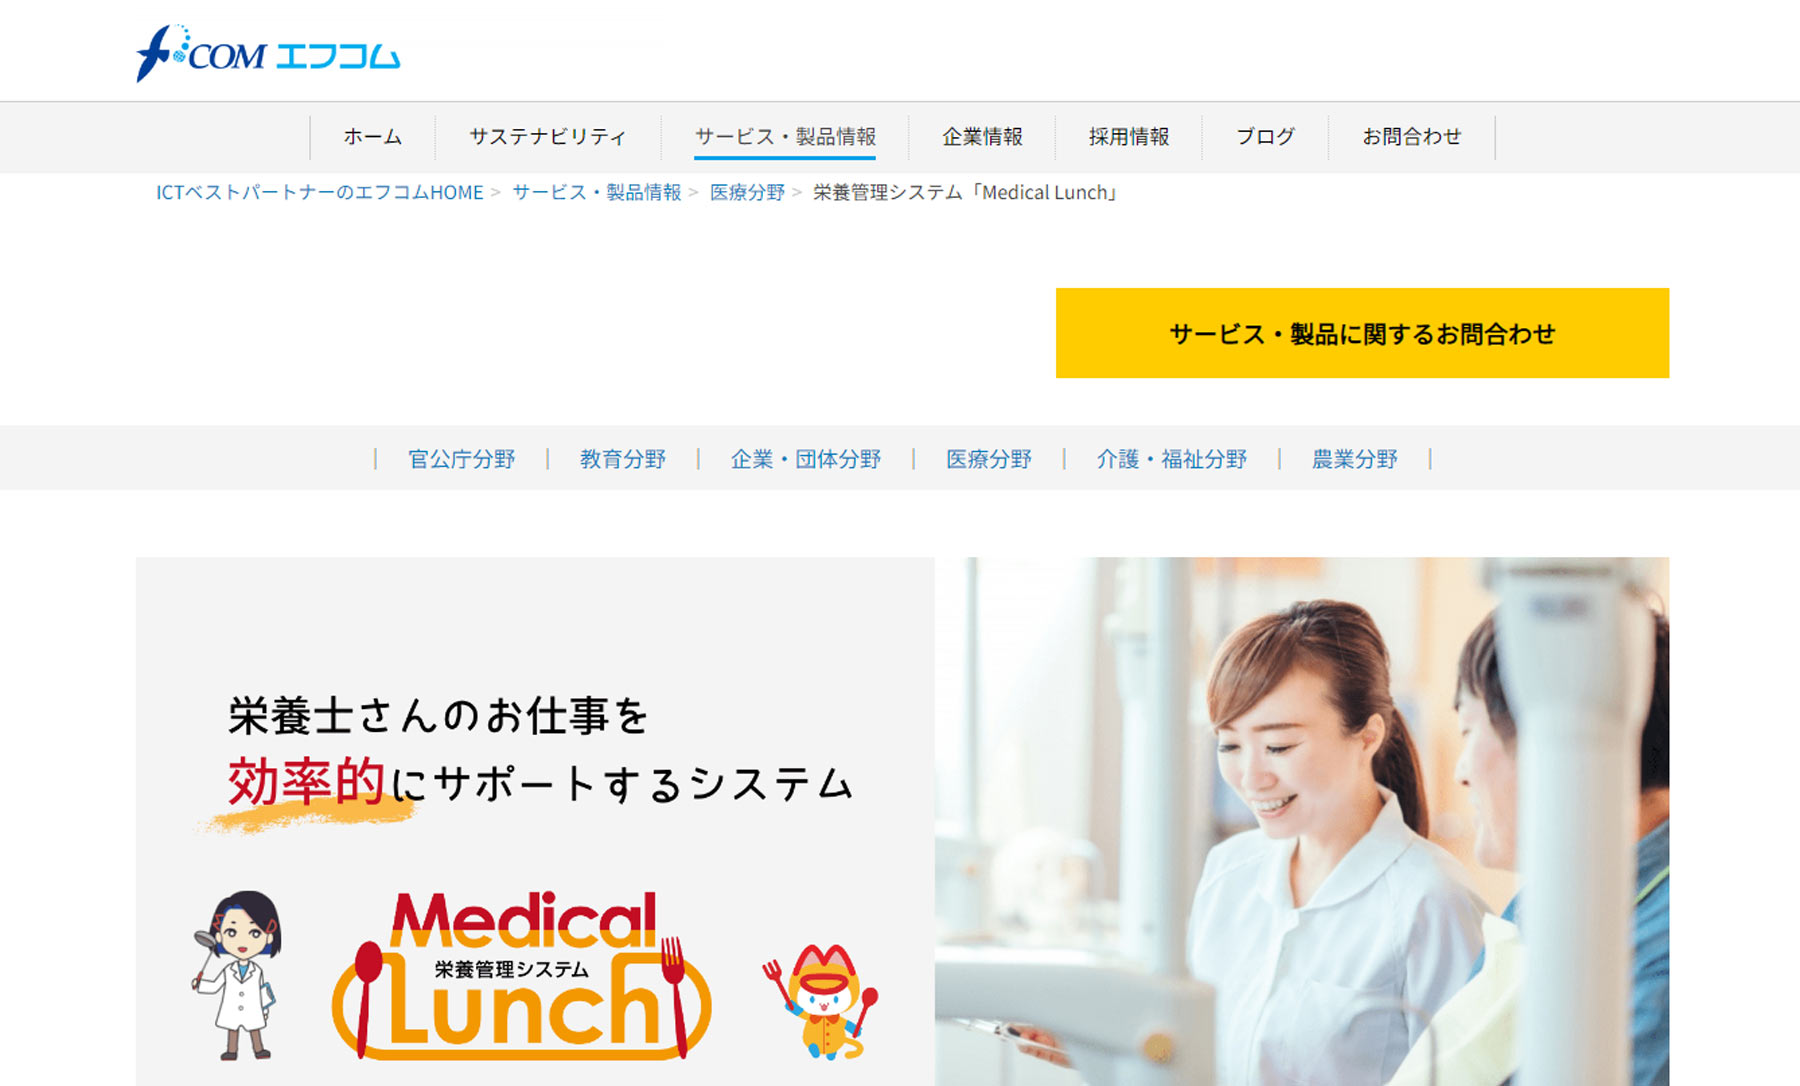 Medical Lunch公式Webサイト